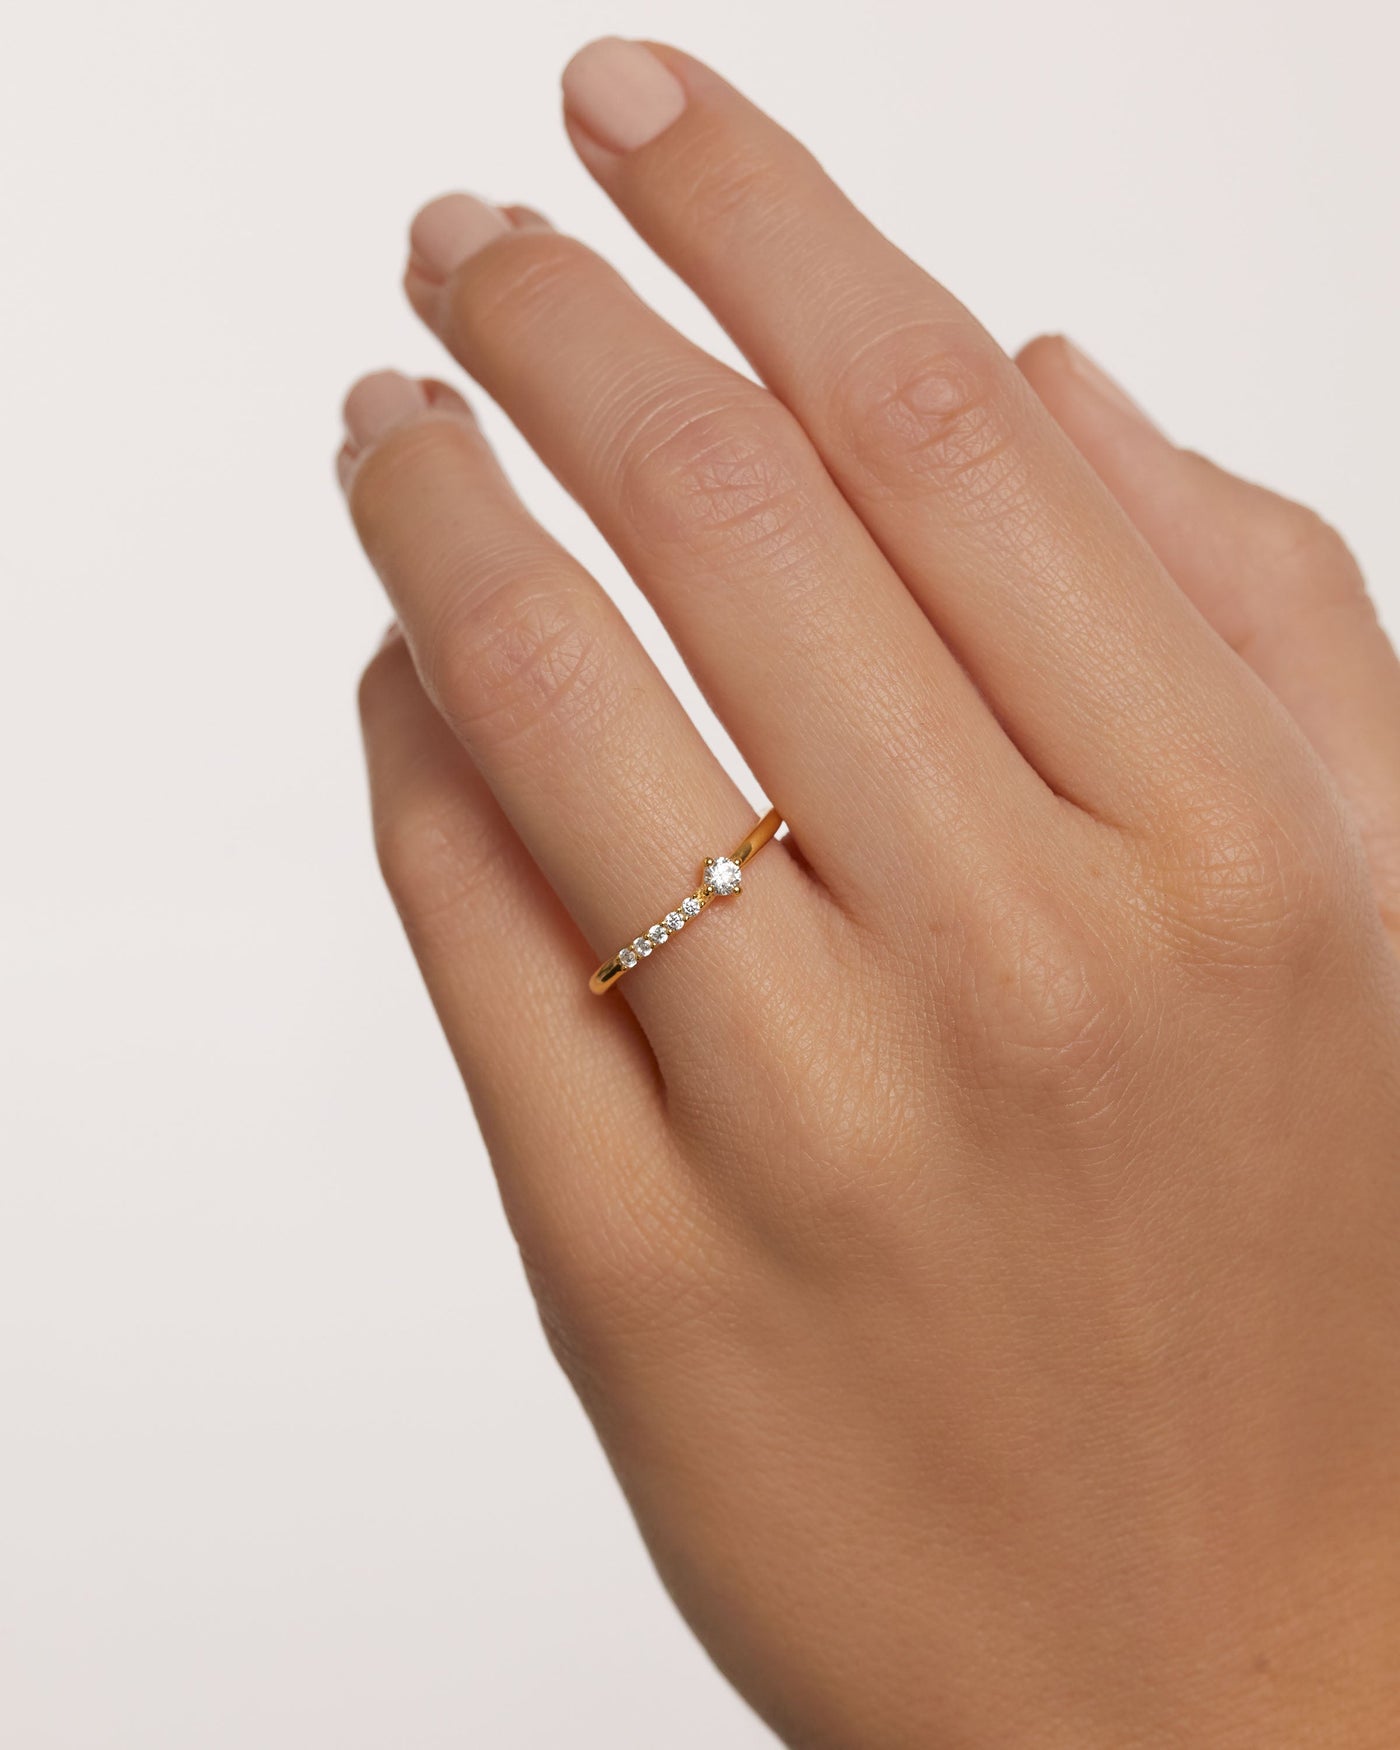 2Ct Round Simulated Diamond Halo Engagement Ring Women's 14K White Gold  Plated | eBay